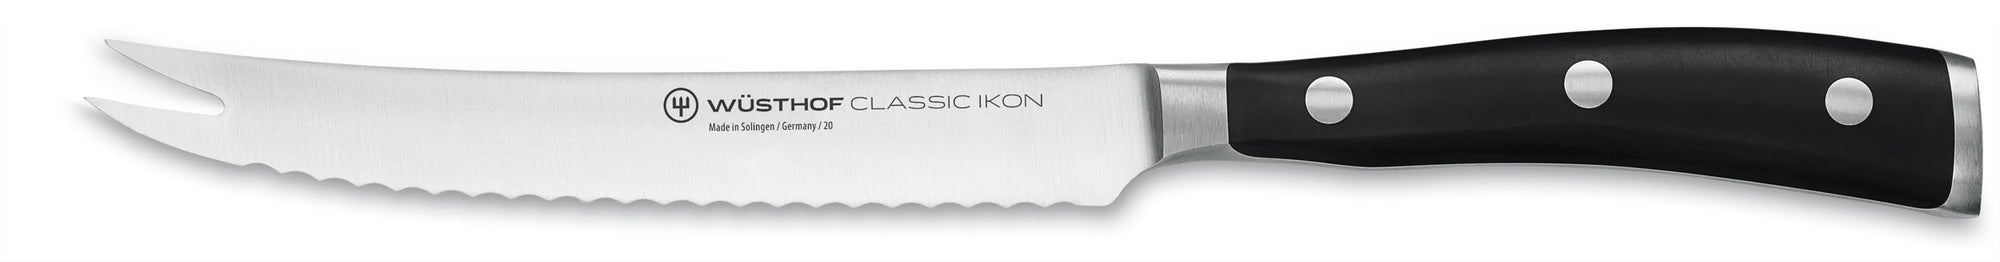 Wusthof Classic IKON Tomato Knife, 5.5-inch (14 cm) - 4136